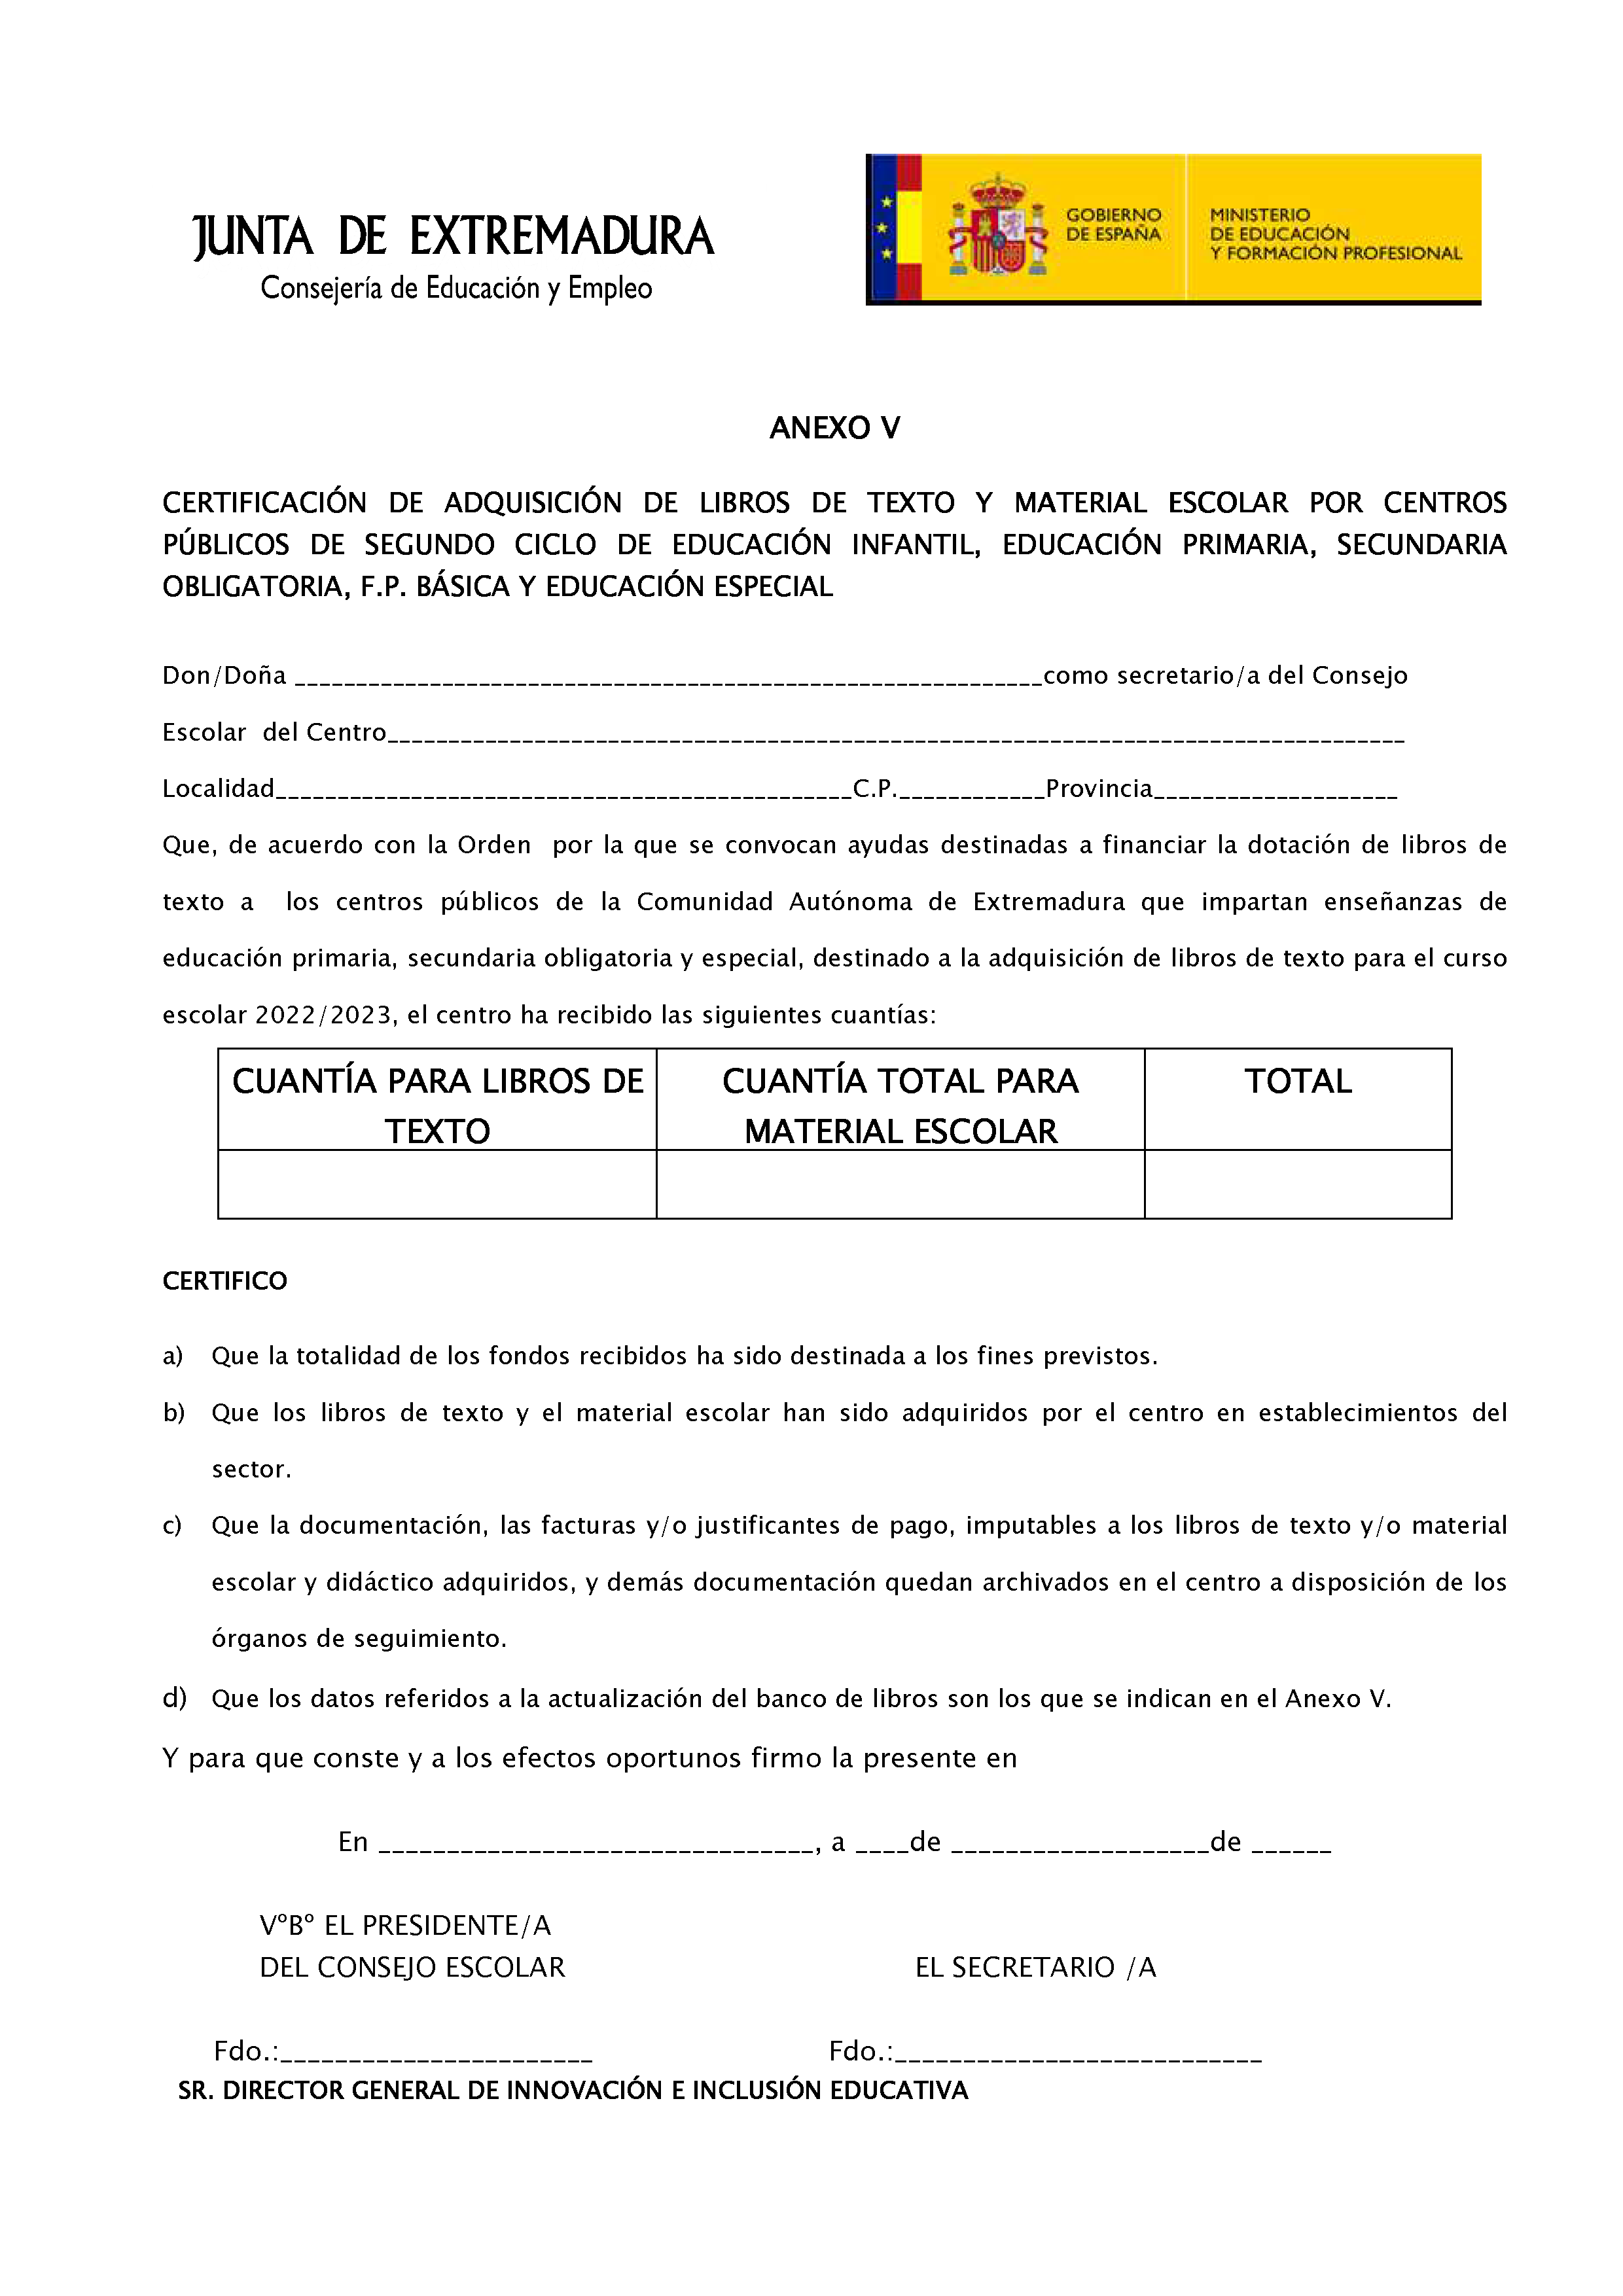 ANEXO V CERTIFICACION DE ADQUISICION DE LIBROS DE TEXTO Y MATERIAL ESCOLAR PAG. 6